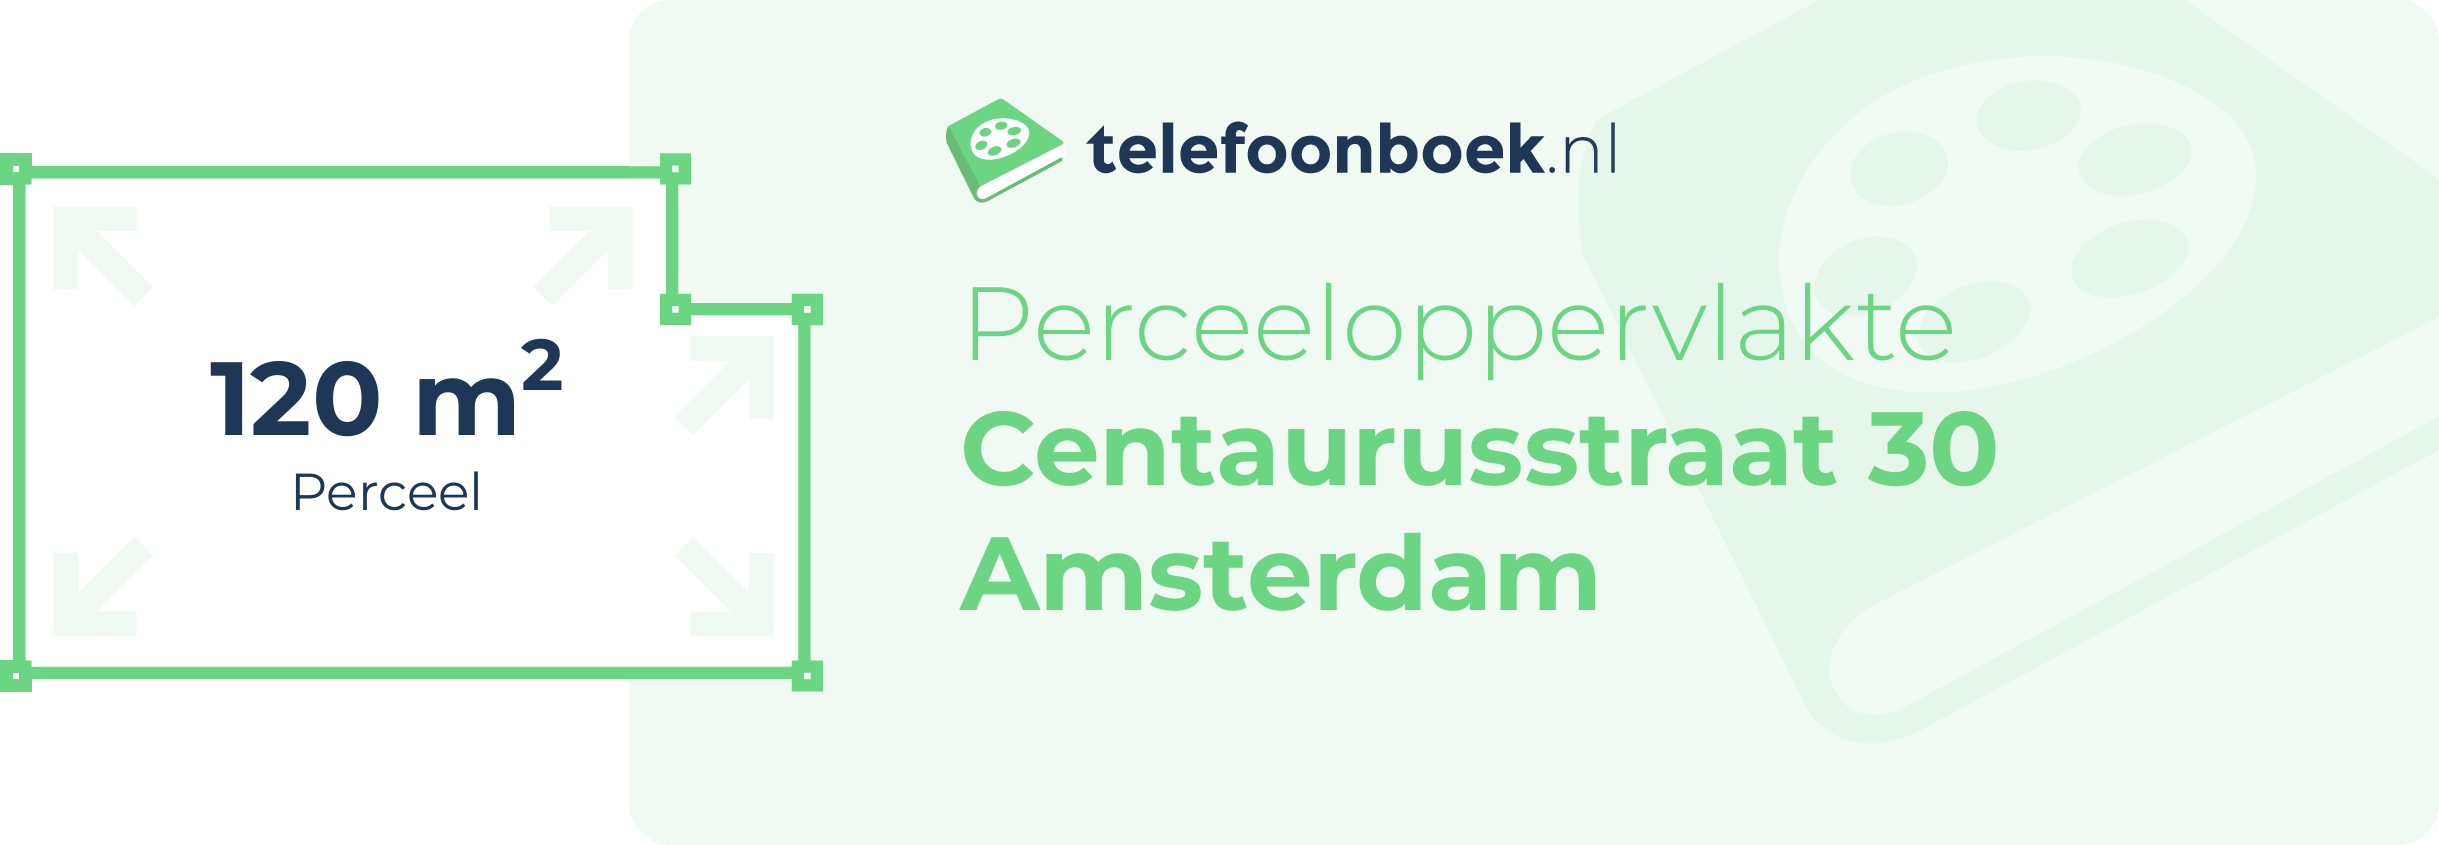 Perceeloppervlakte Centaurusstraat 30 Amsterdam